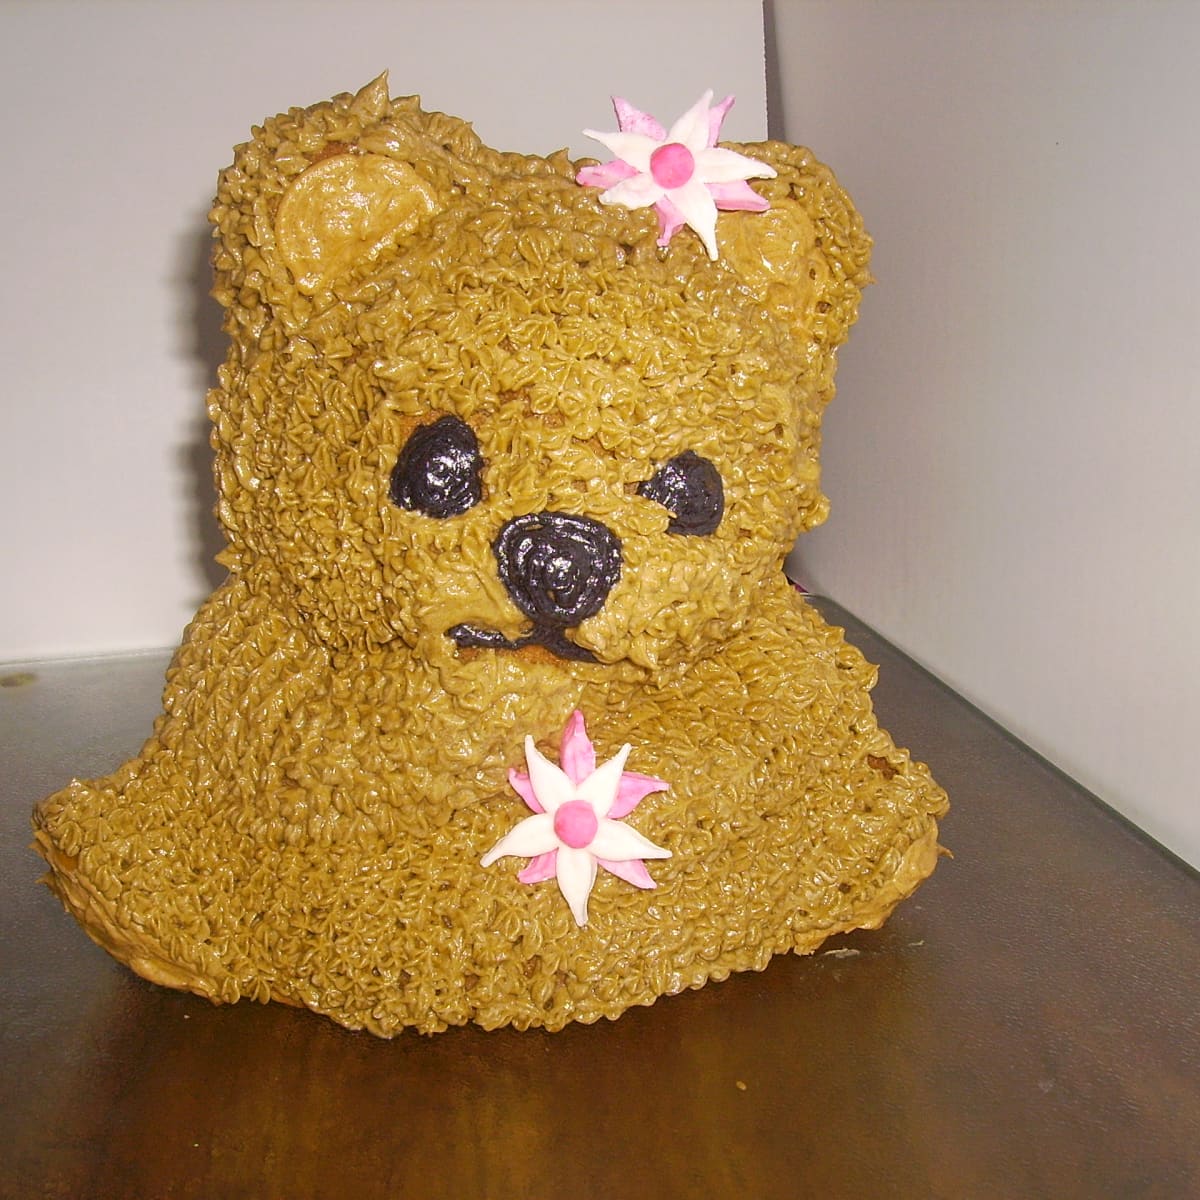 3D Teddy Bear Cake » Once Upon A Cake